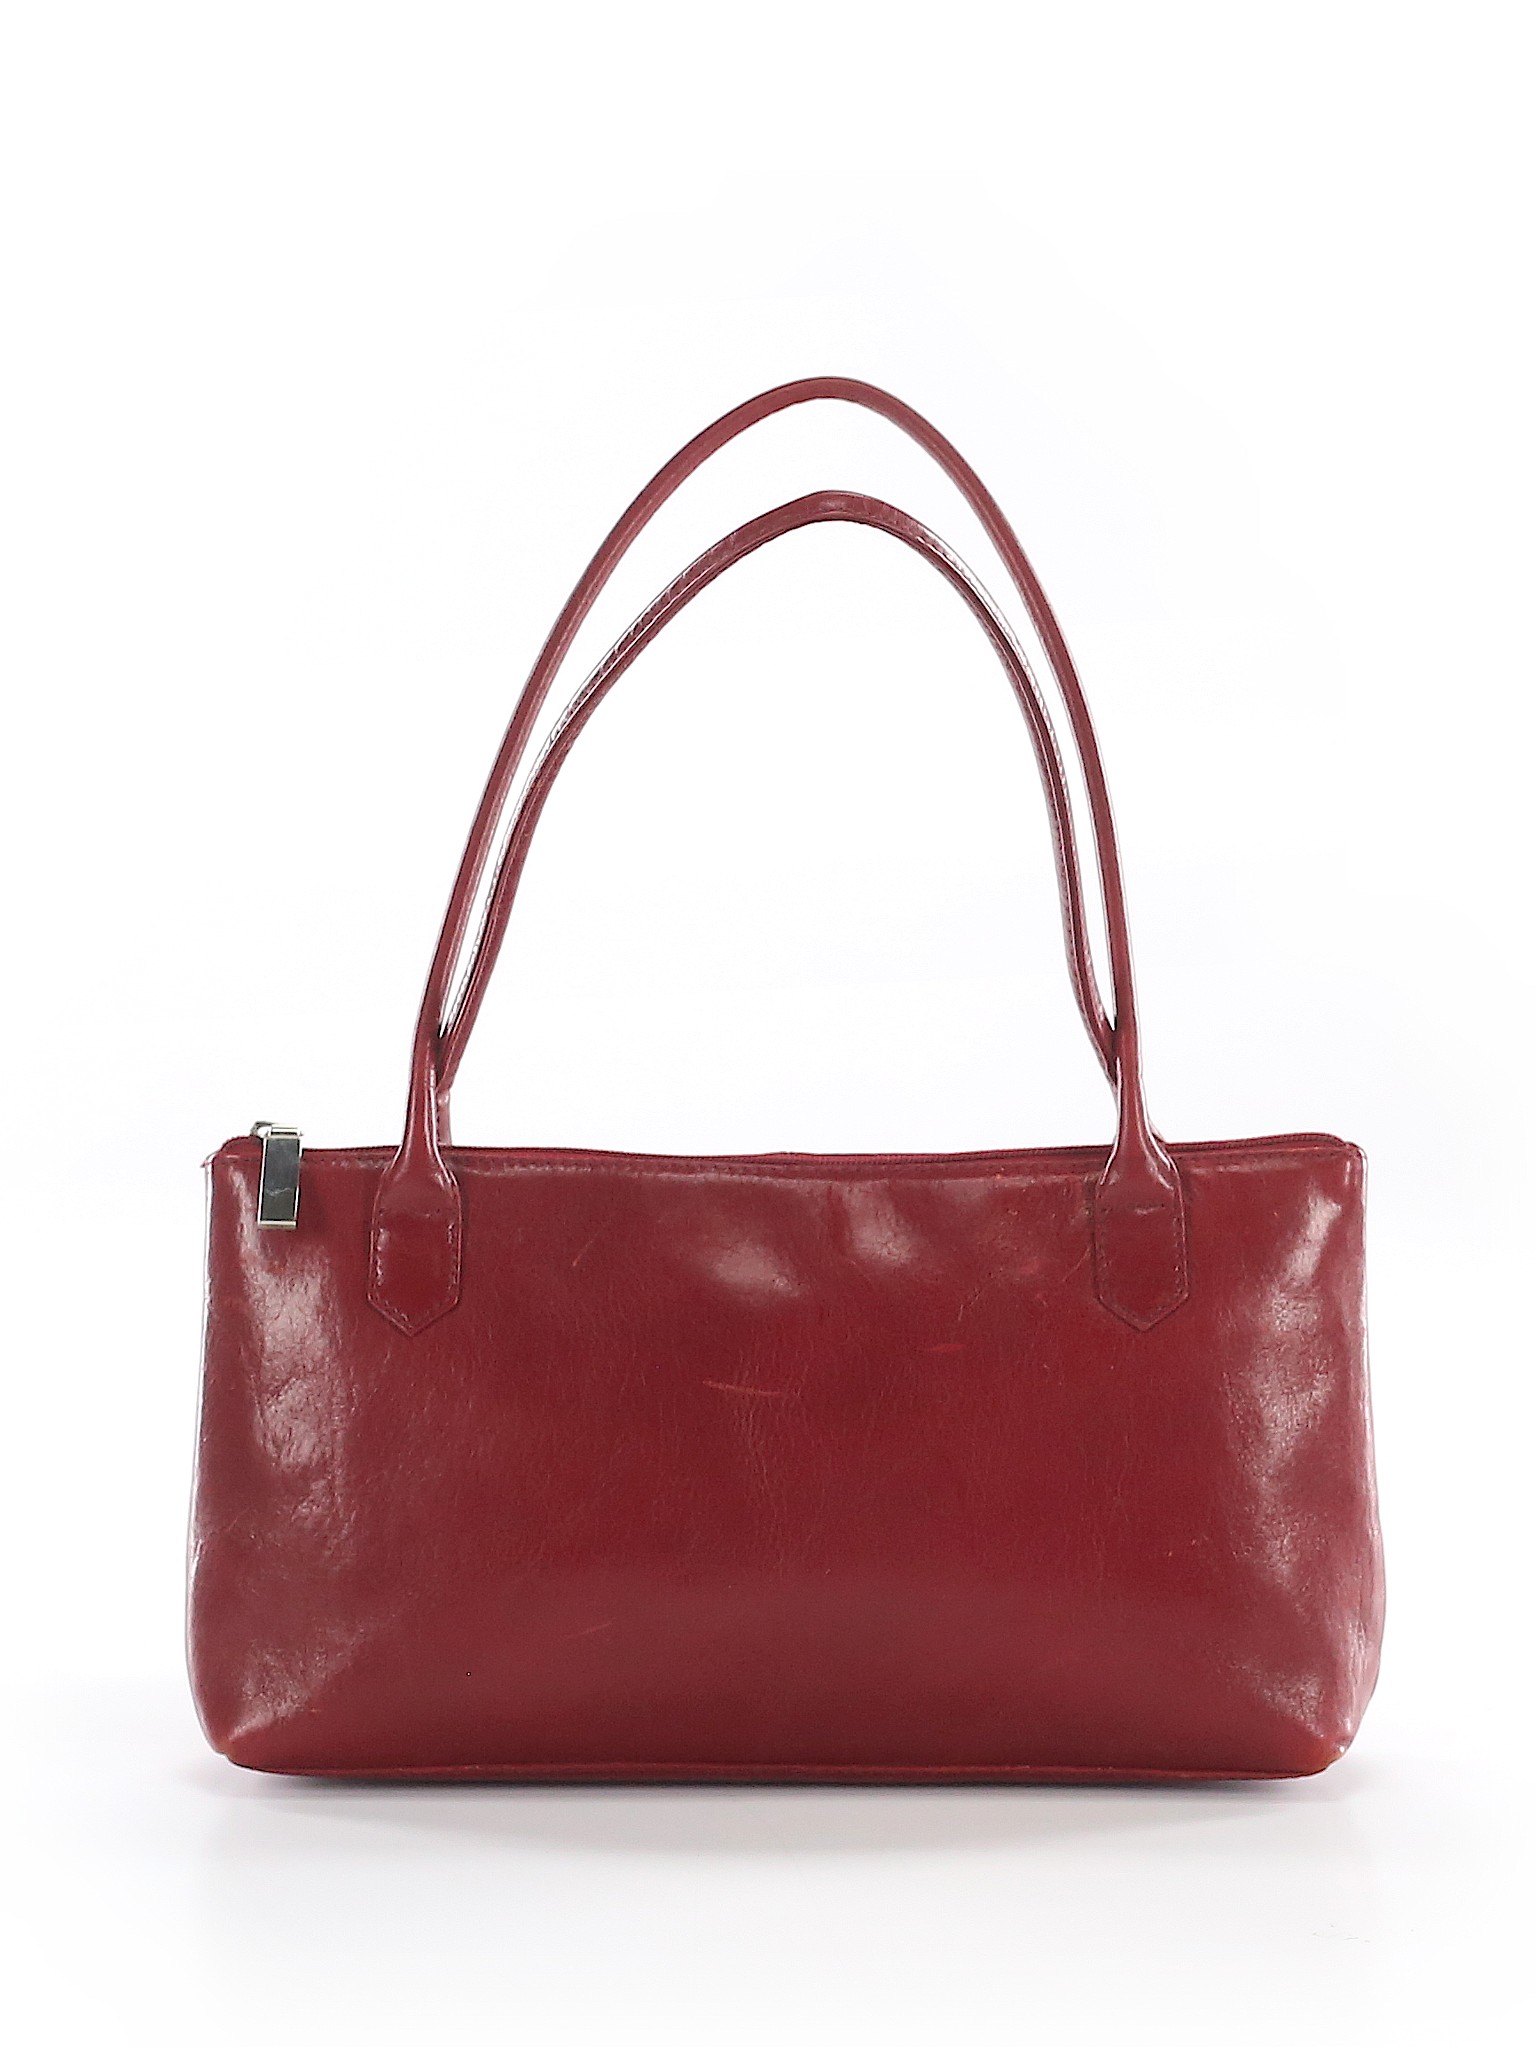 Hobo International 100% Leather Solid Red Leather Shoulder Bag One Size ...